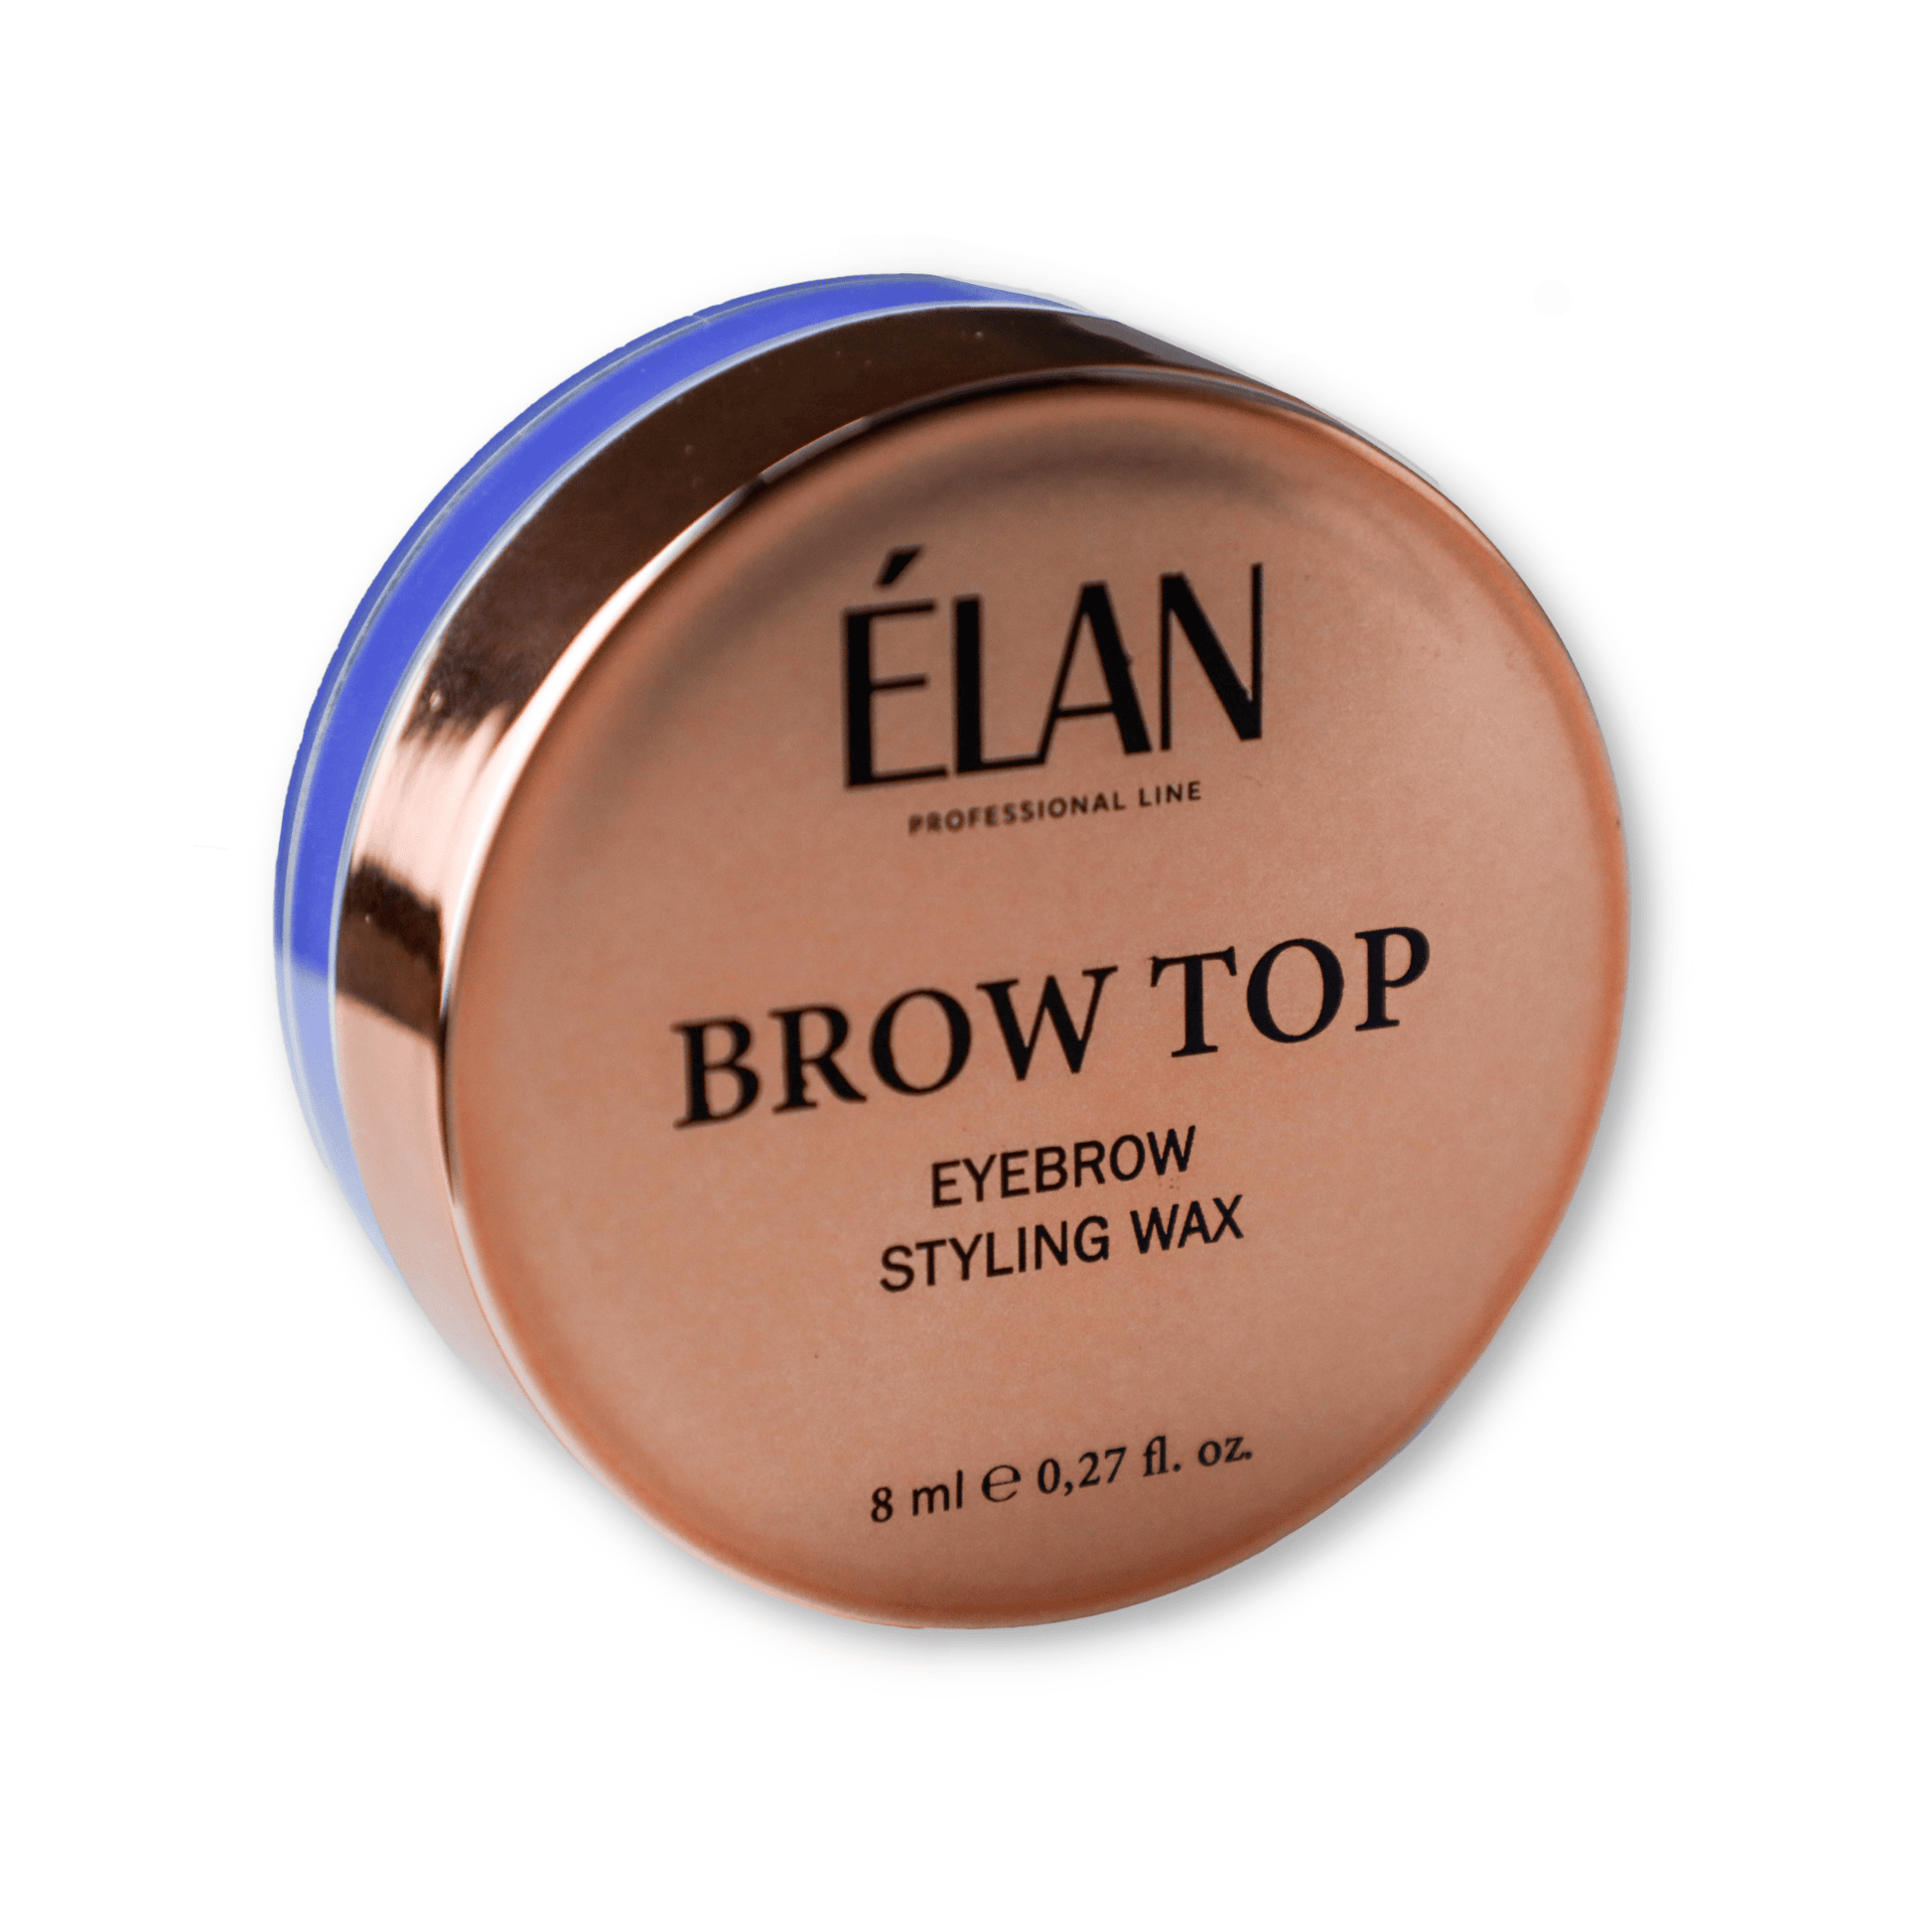 Élan Brow Top Eyebrow Styling Wax